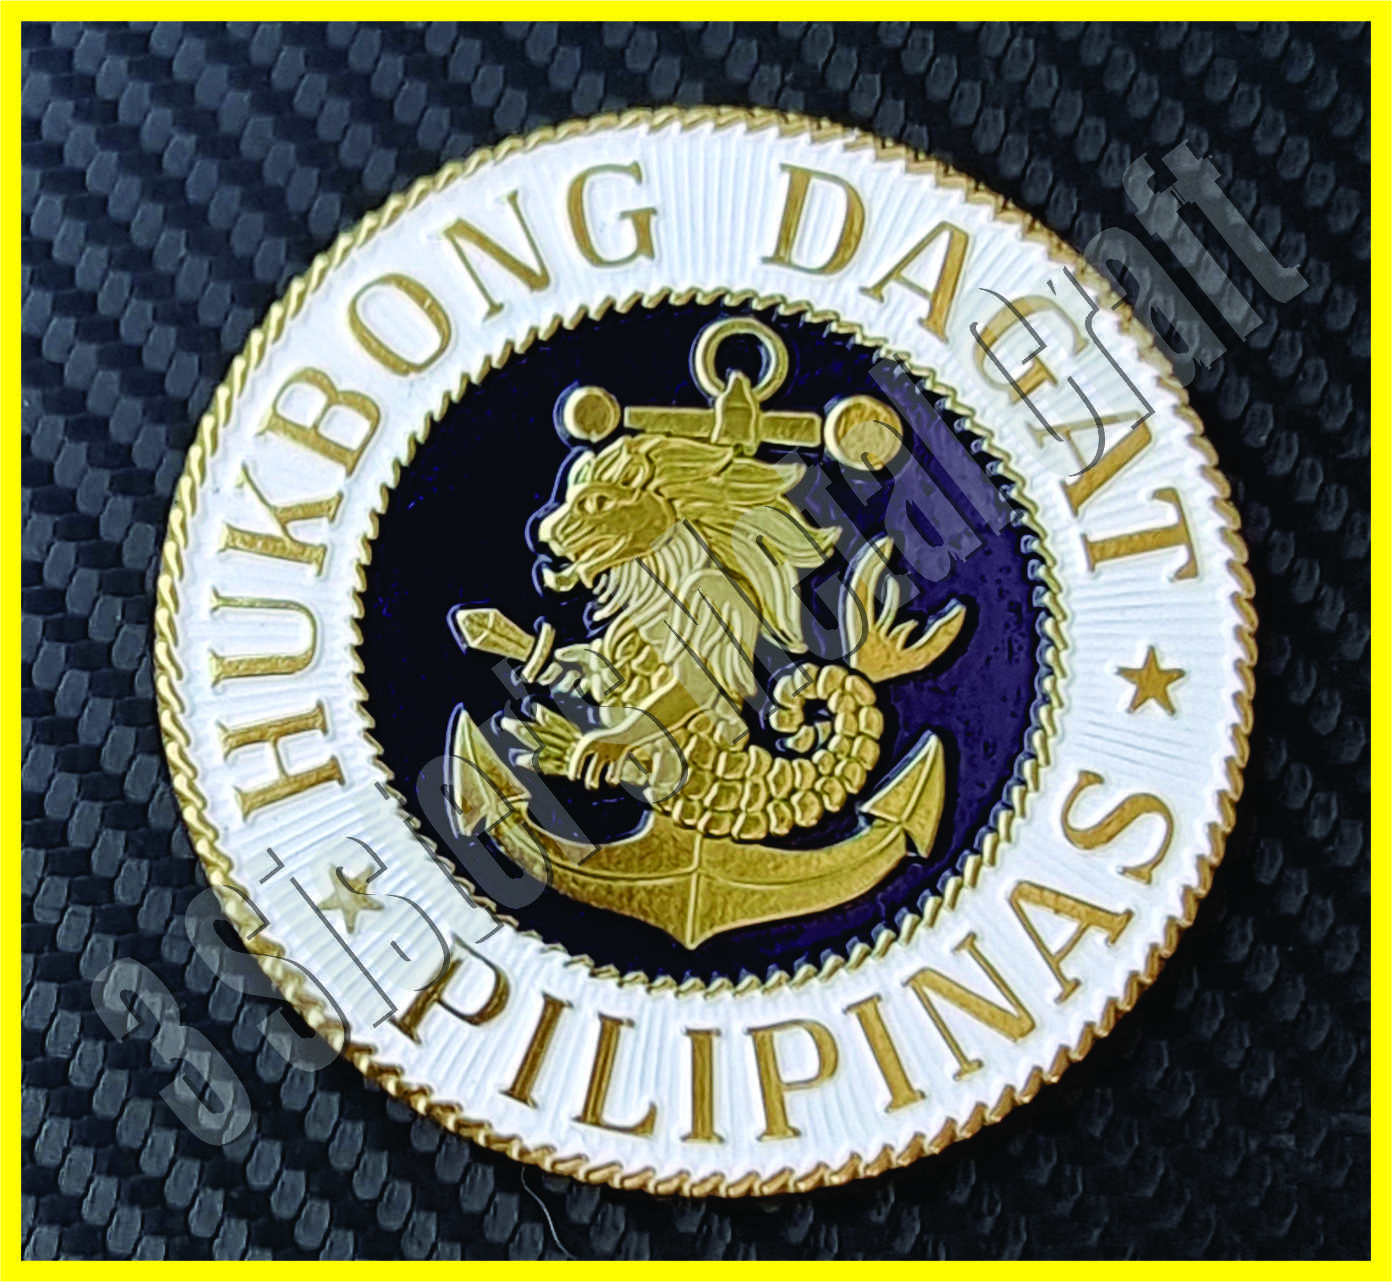 philippine navy logo